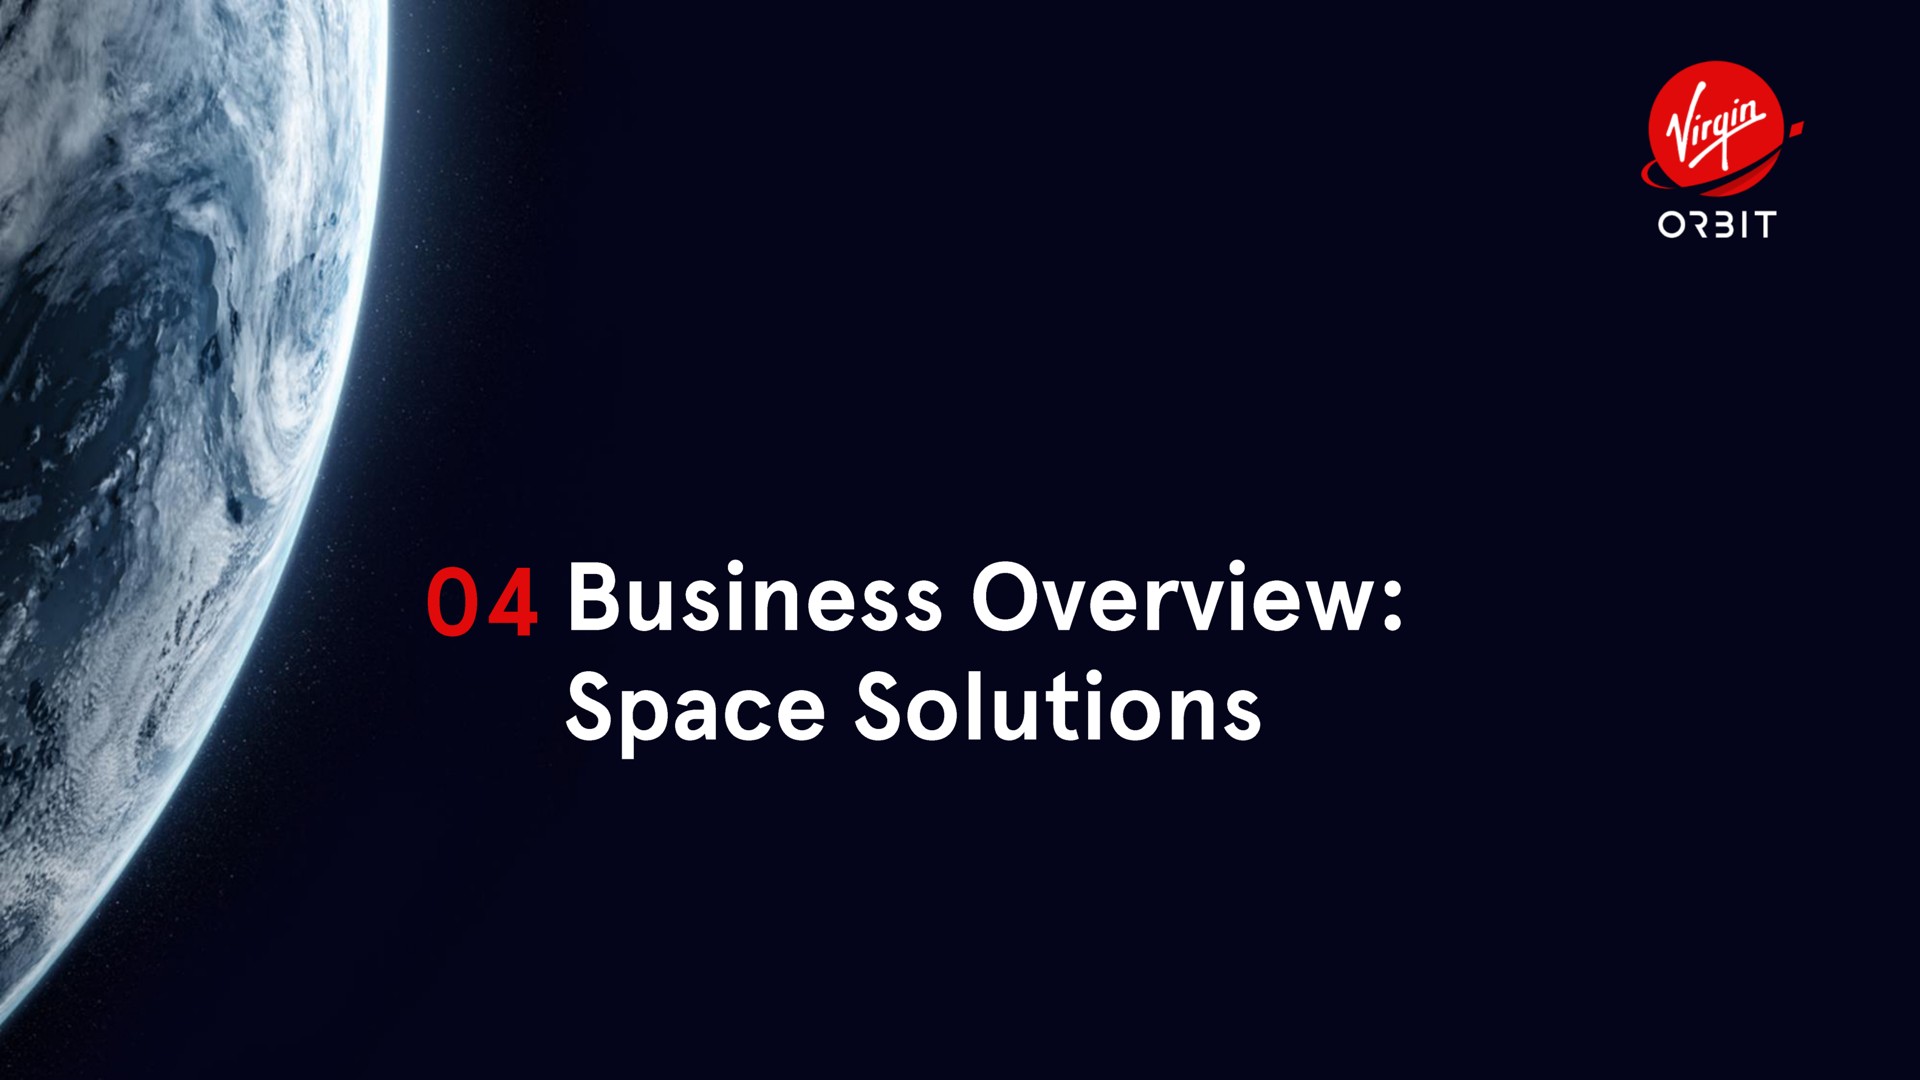 business overview space solutions | Virgin Orbit